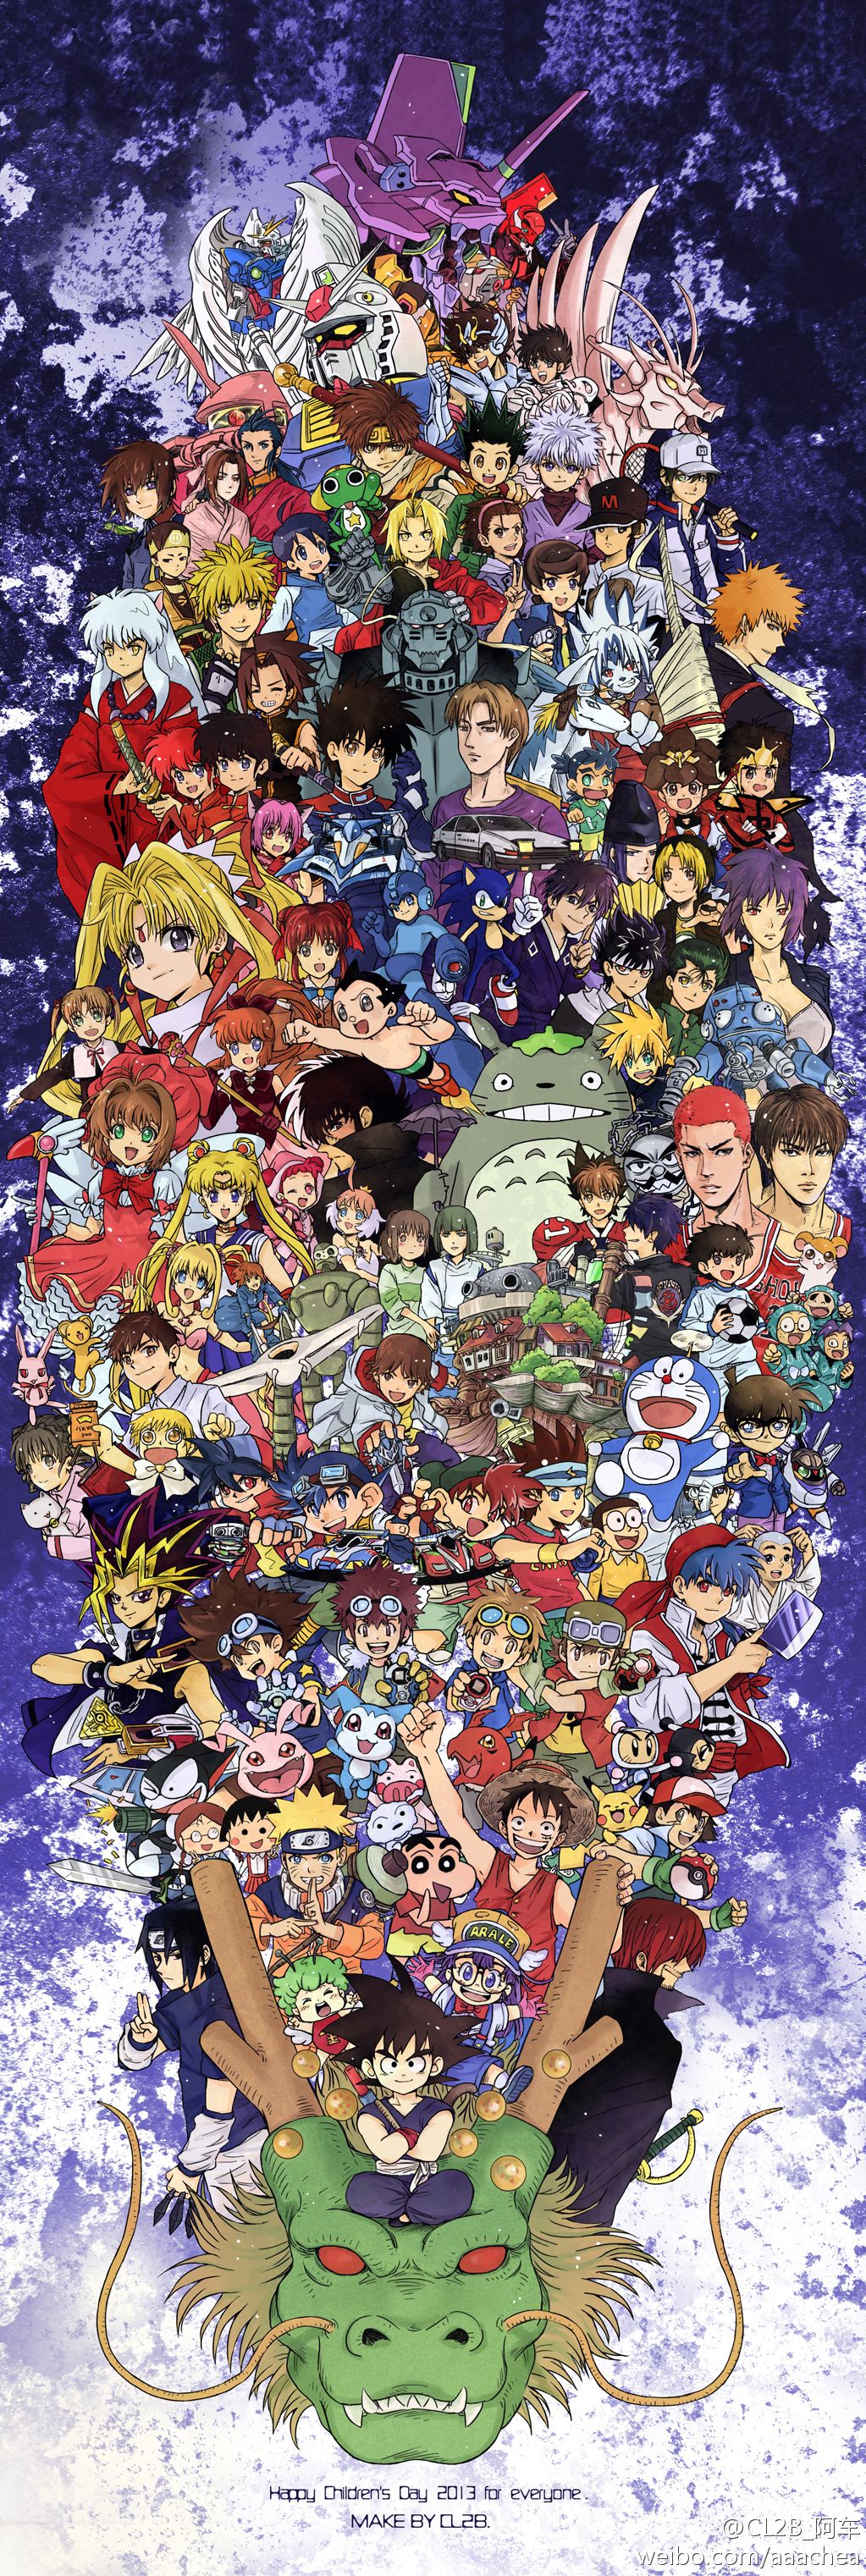 Anime Heroes